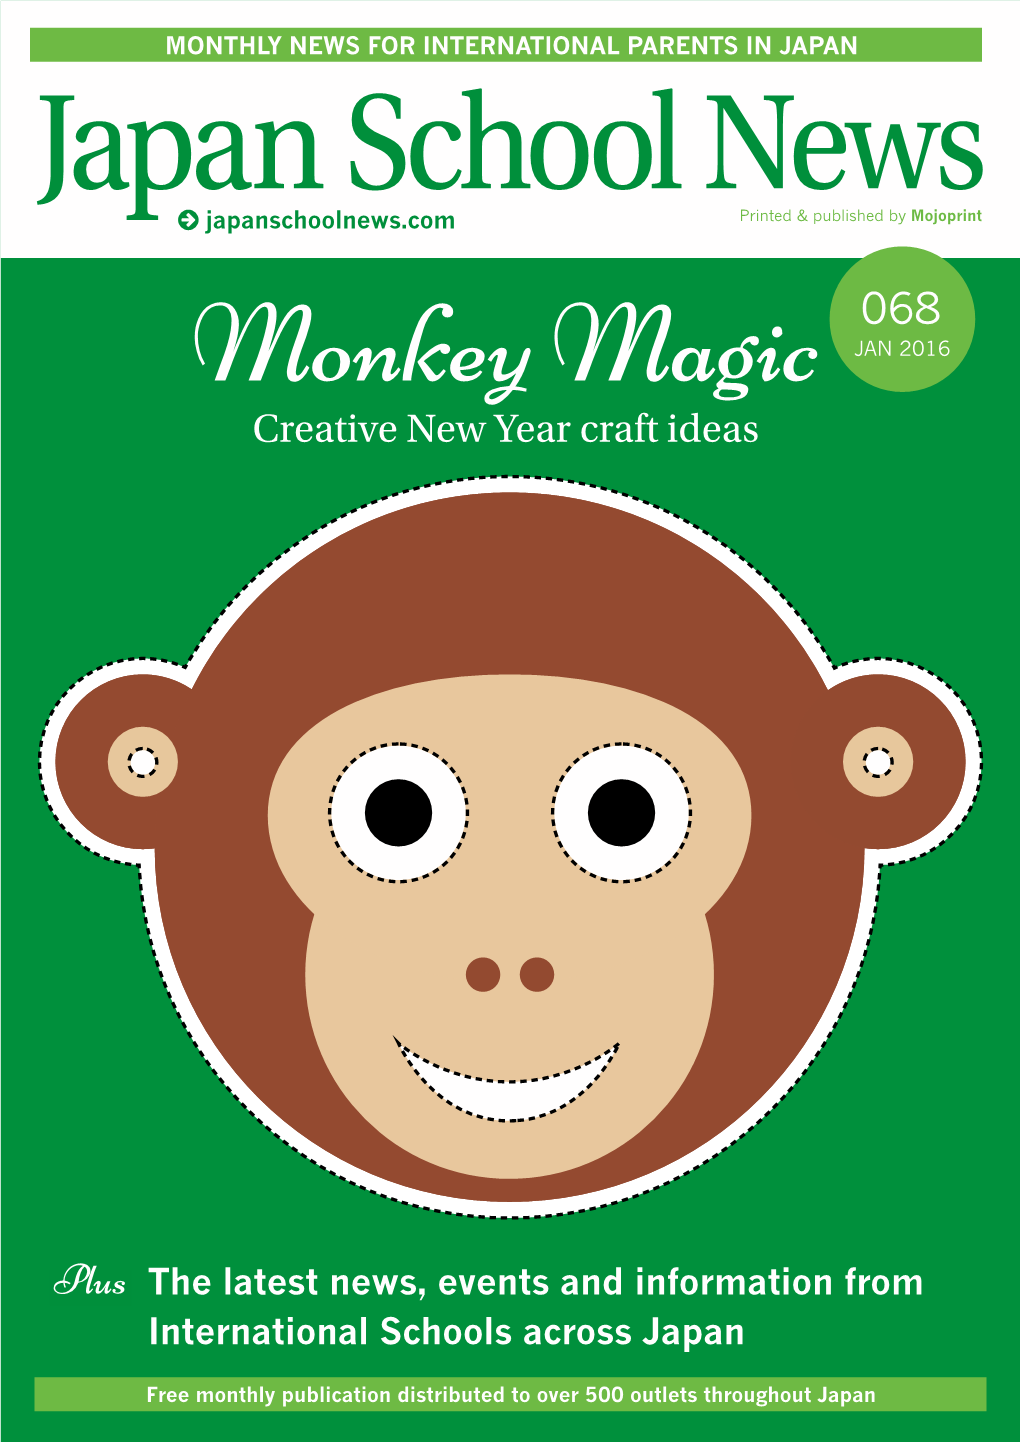 Monkey Magic JAN 2016 Creative New Year Craft Ideas